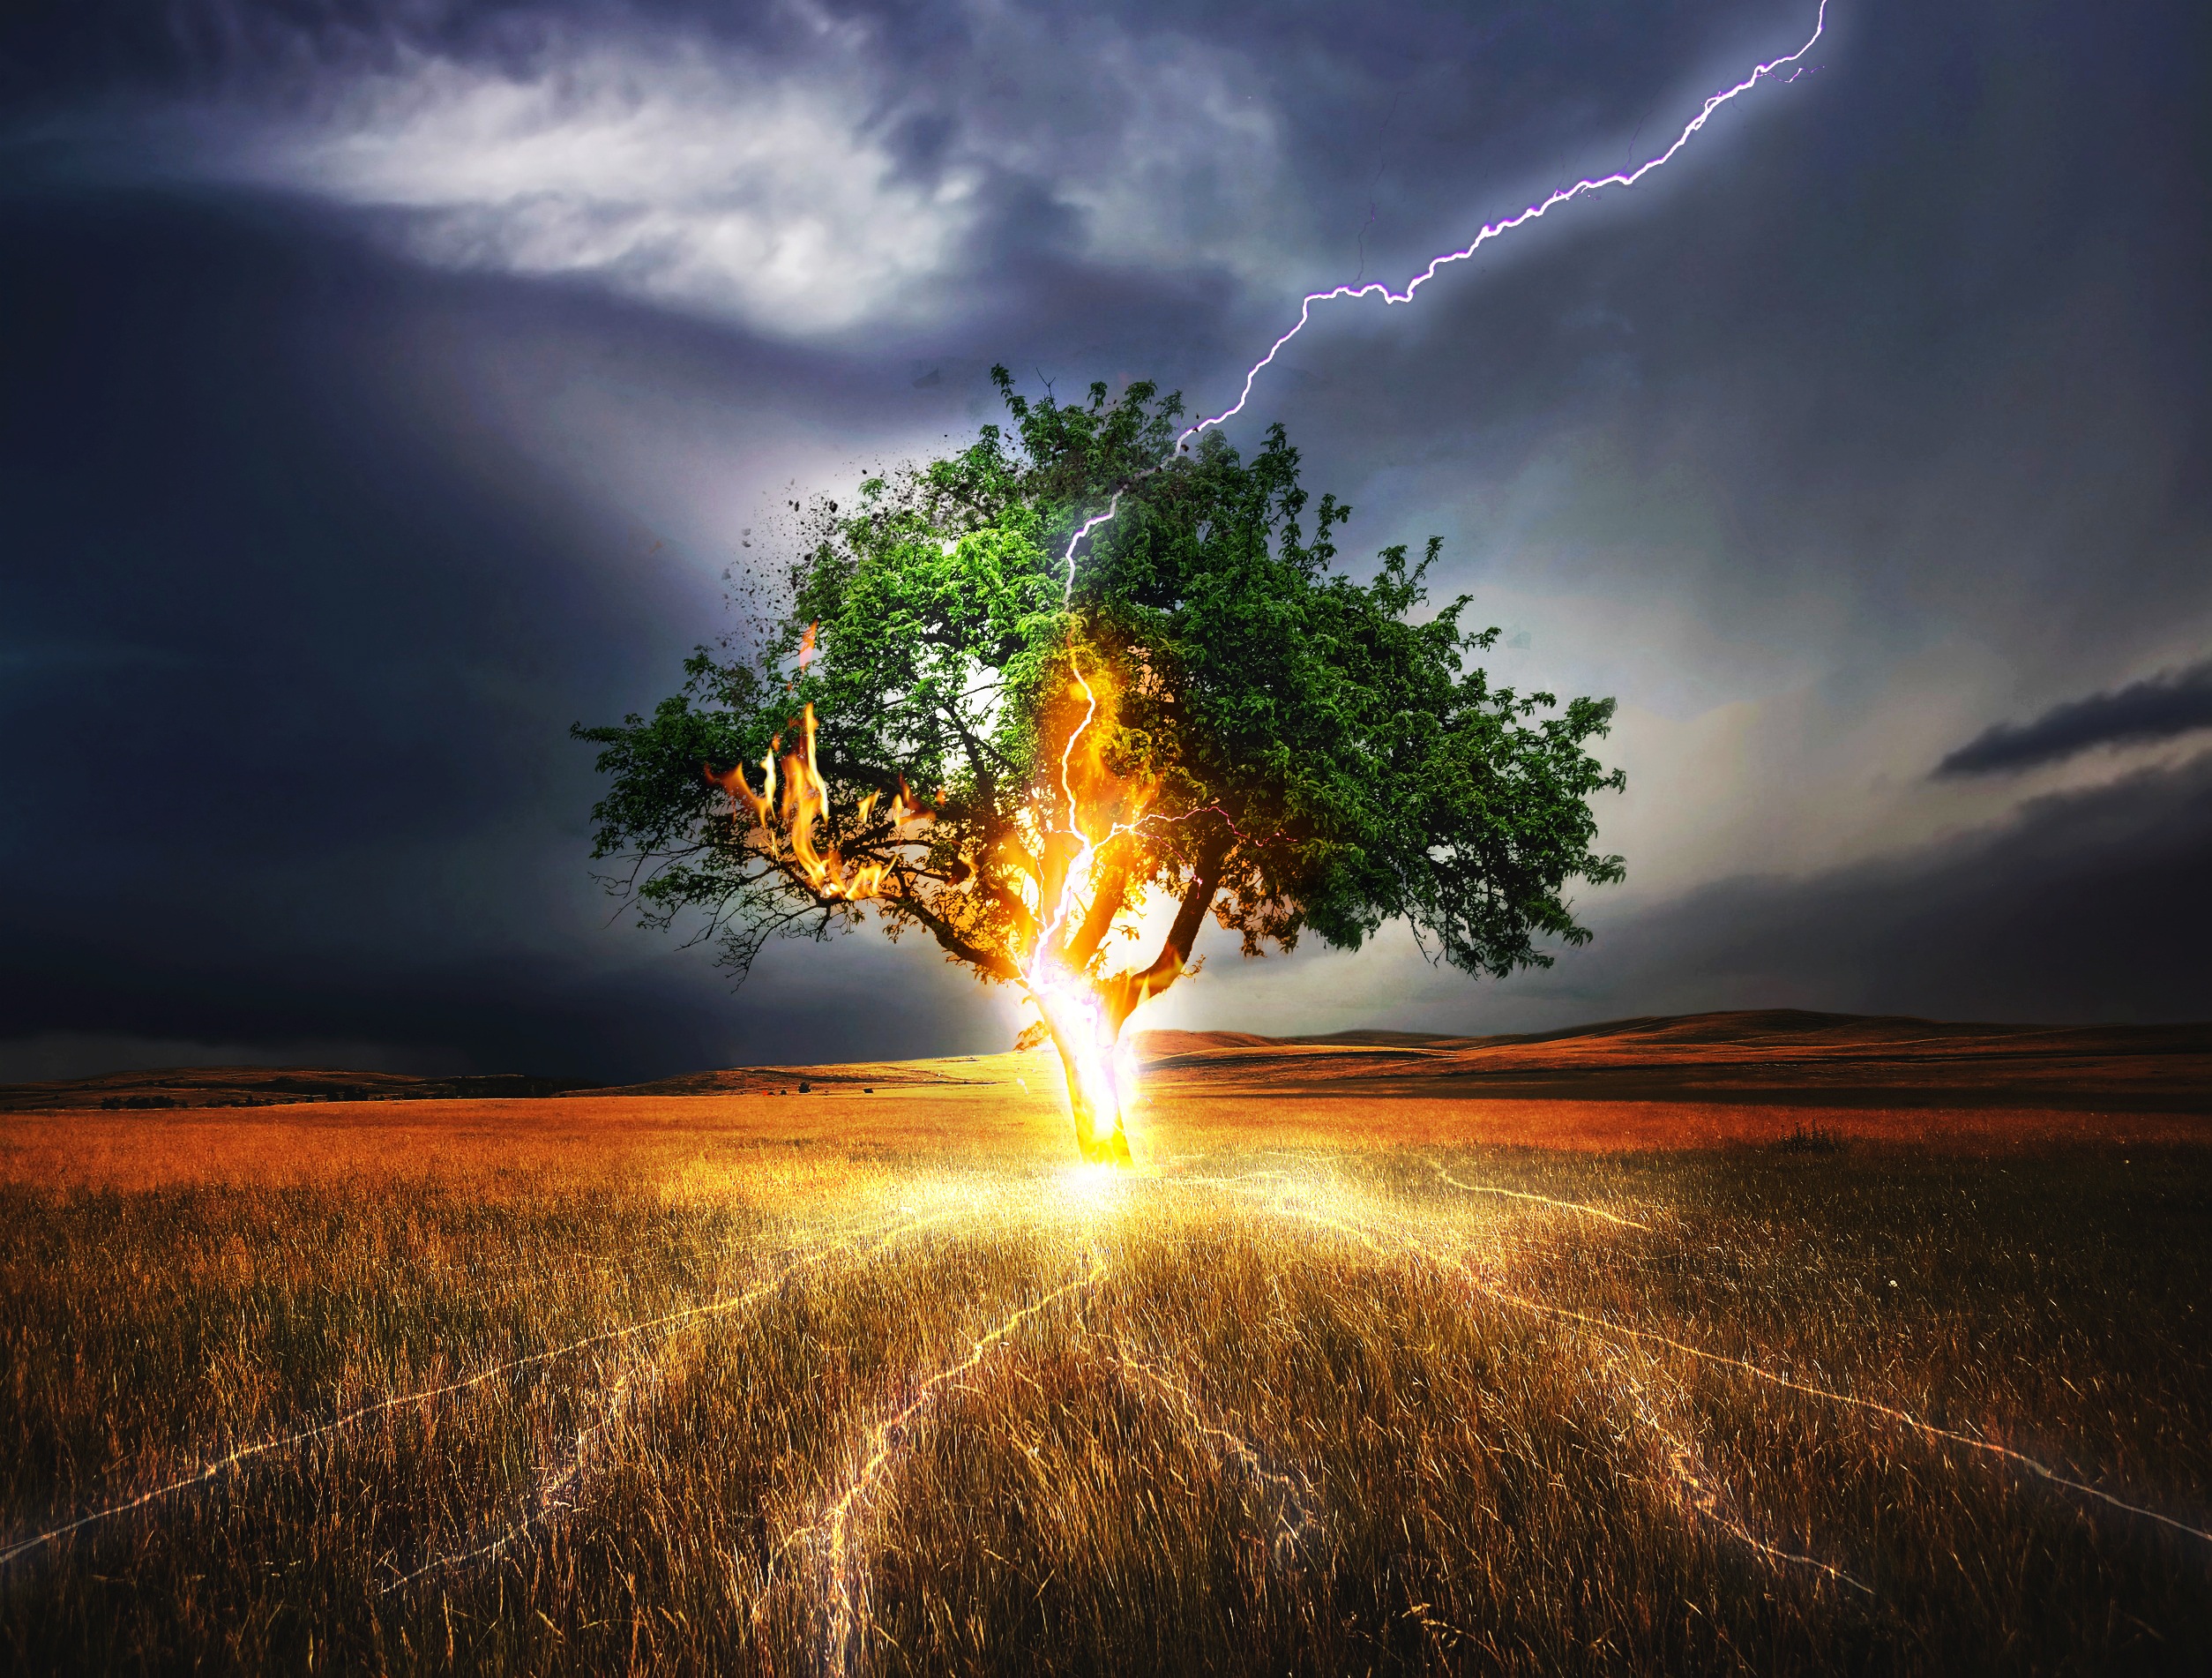 Lightning on the tree photo